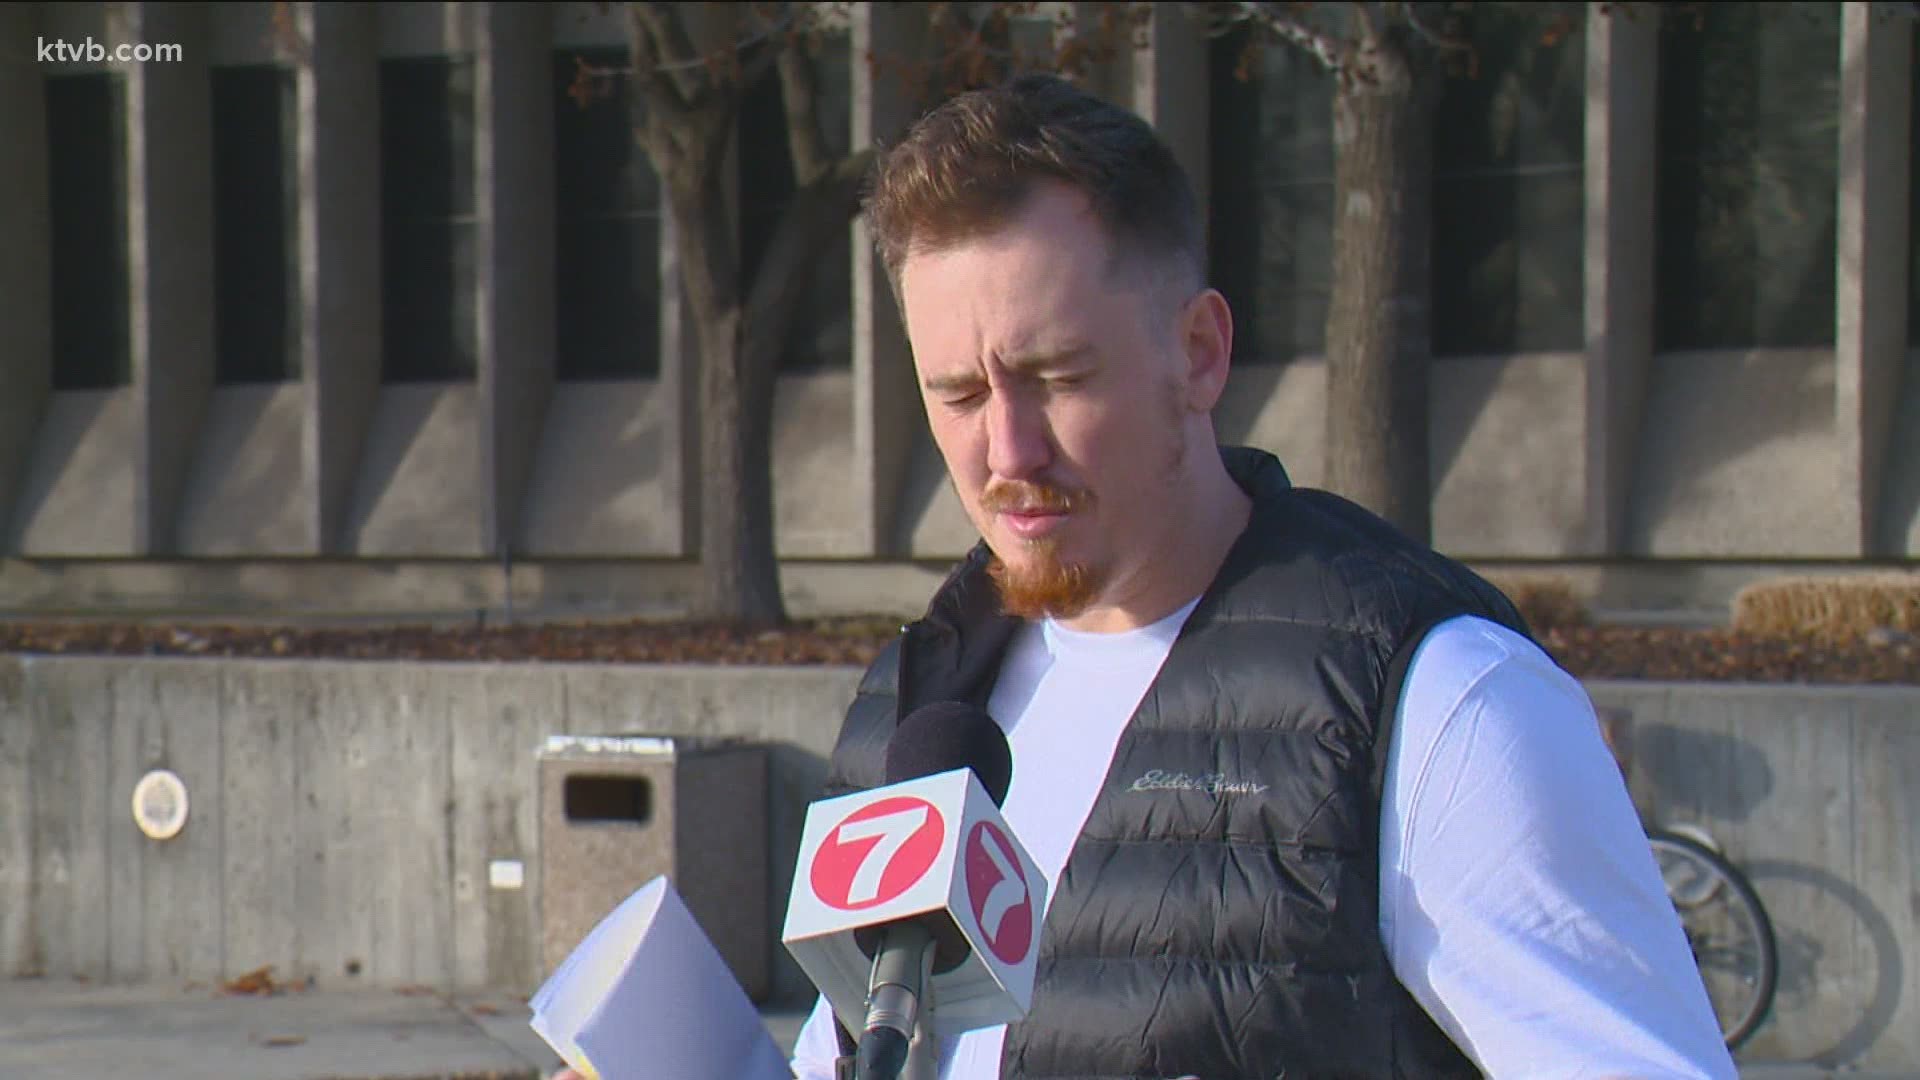 Josiah Colt, an Idaho man who broke into the U.S. Capitol, spoke to KTVB after leaving the Ada County Jail.